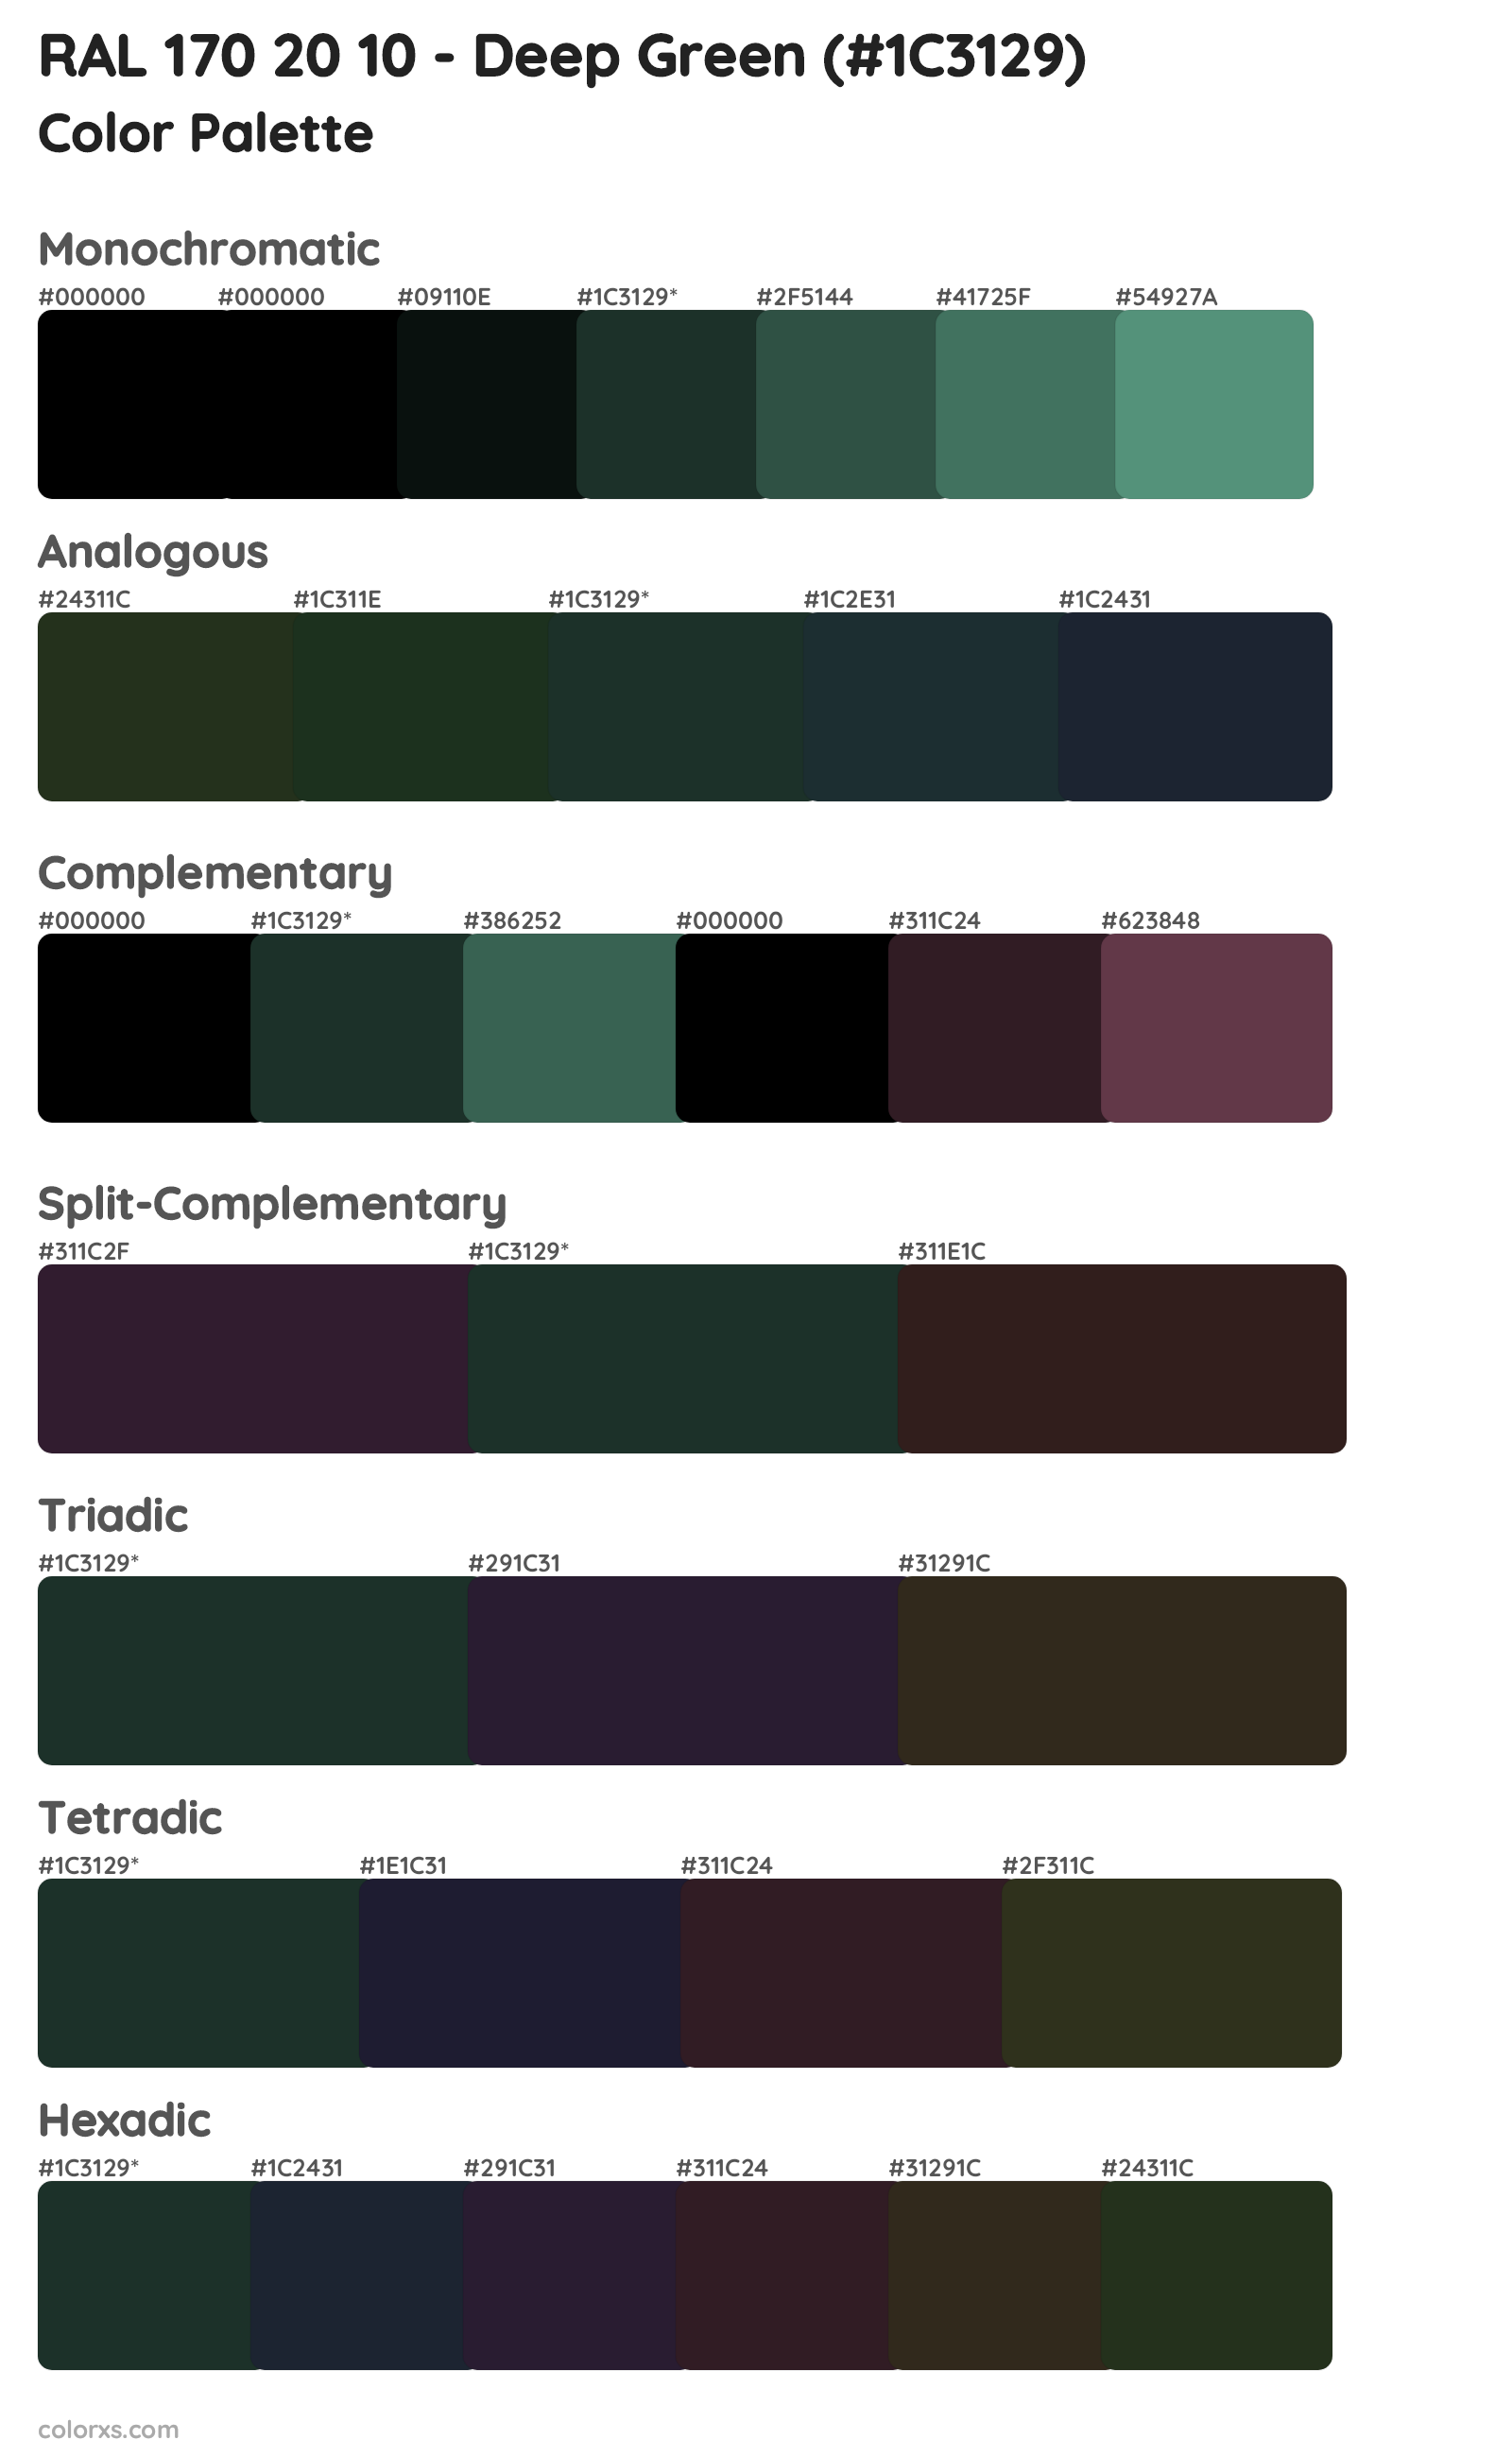 RAL 170 20 10 - Deep Green Color Scheme Palettes